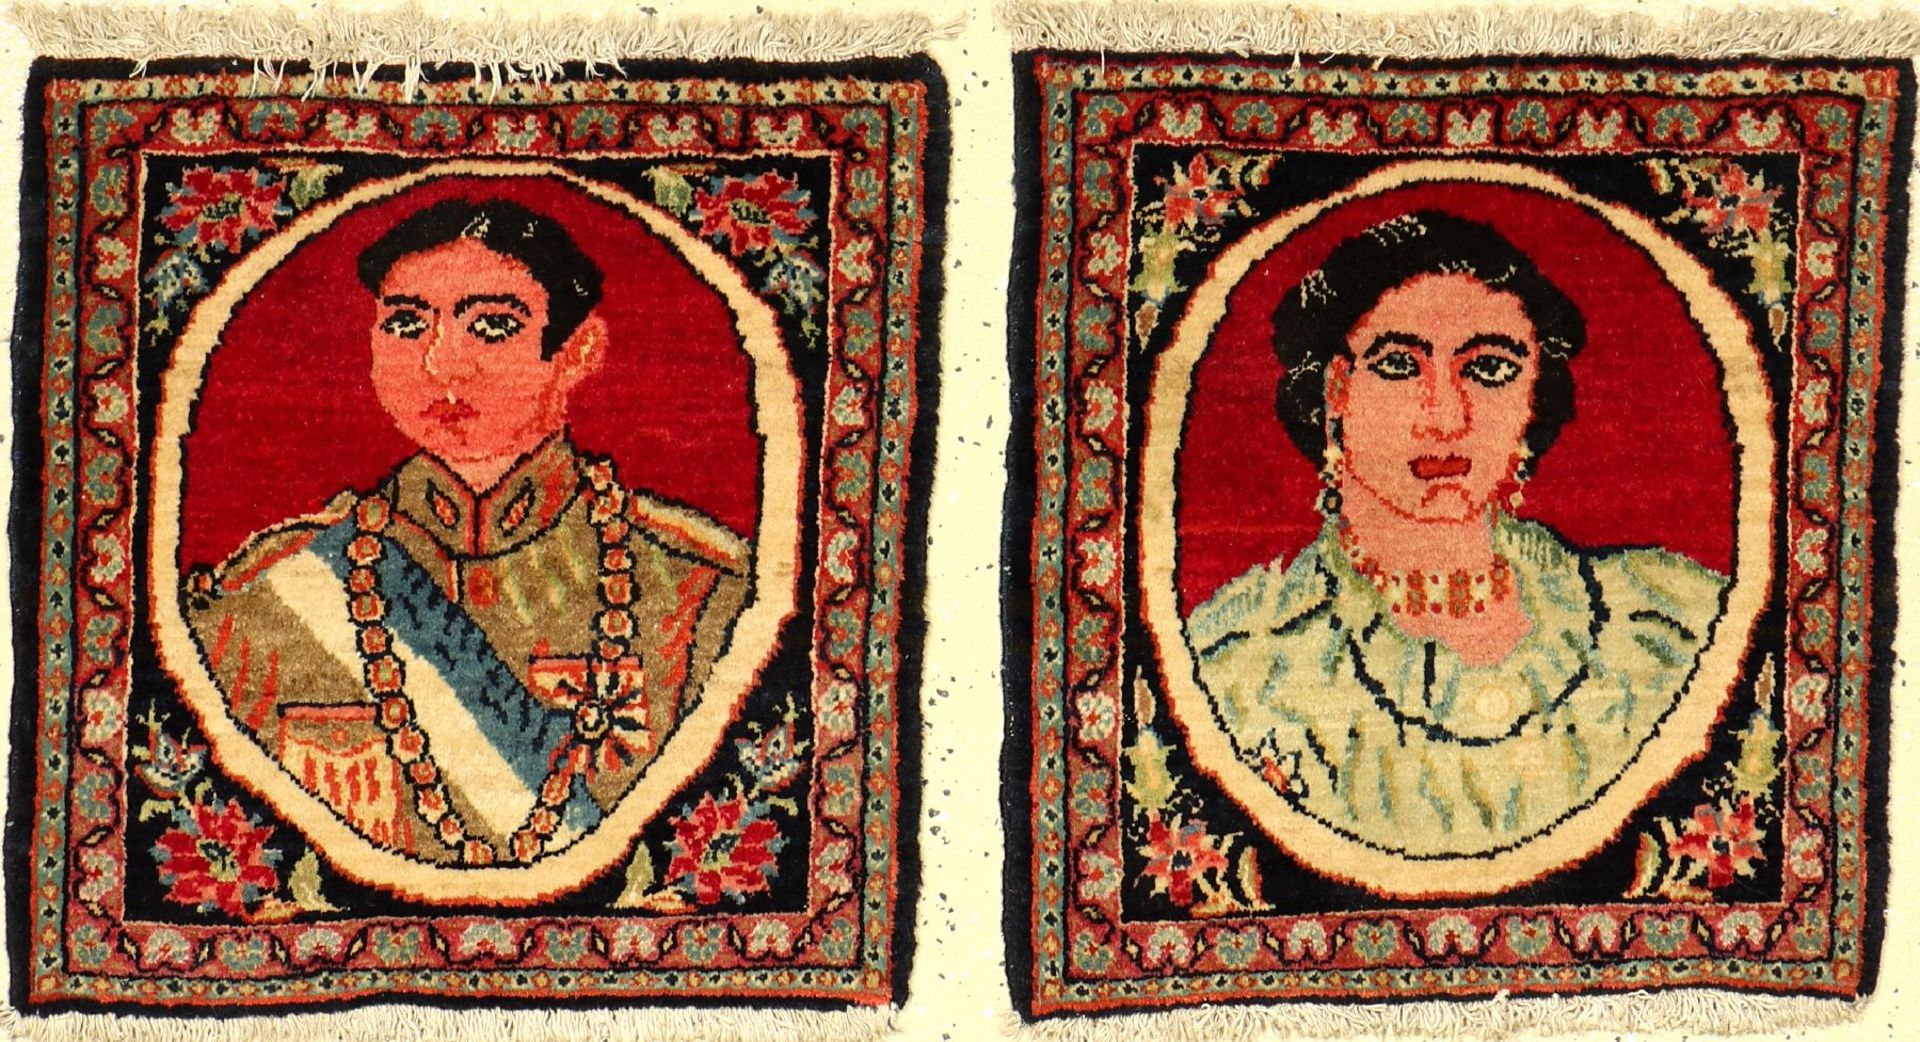 Khorassan Rug (Shah Pahlavi and Soraya), Persia, around 1960, wool on cotton, approx. 50 x 45 cm,